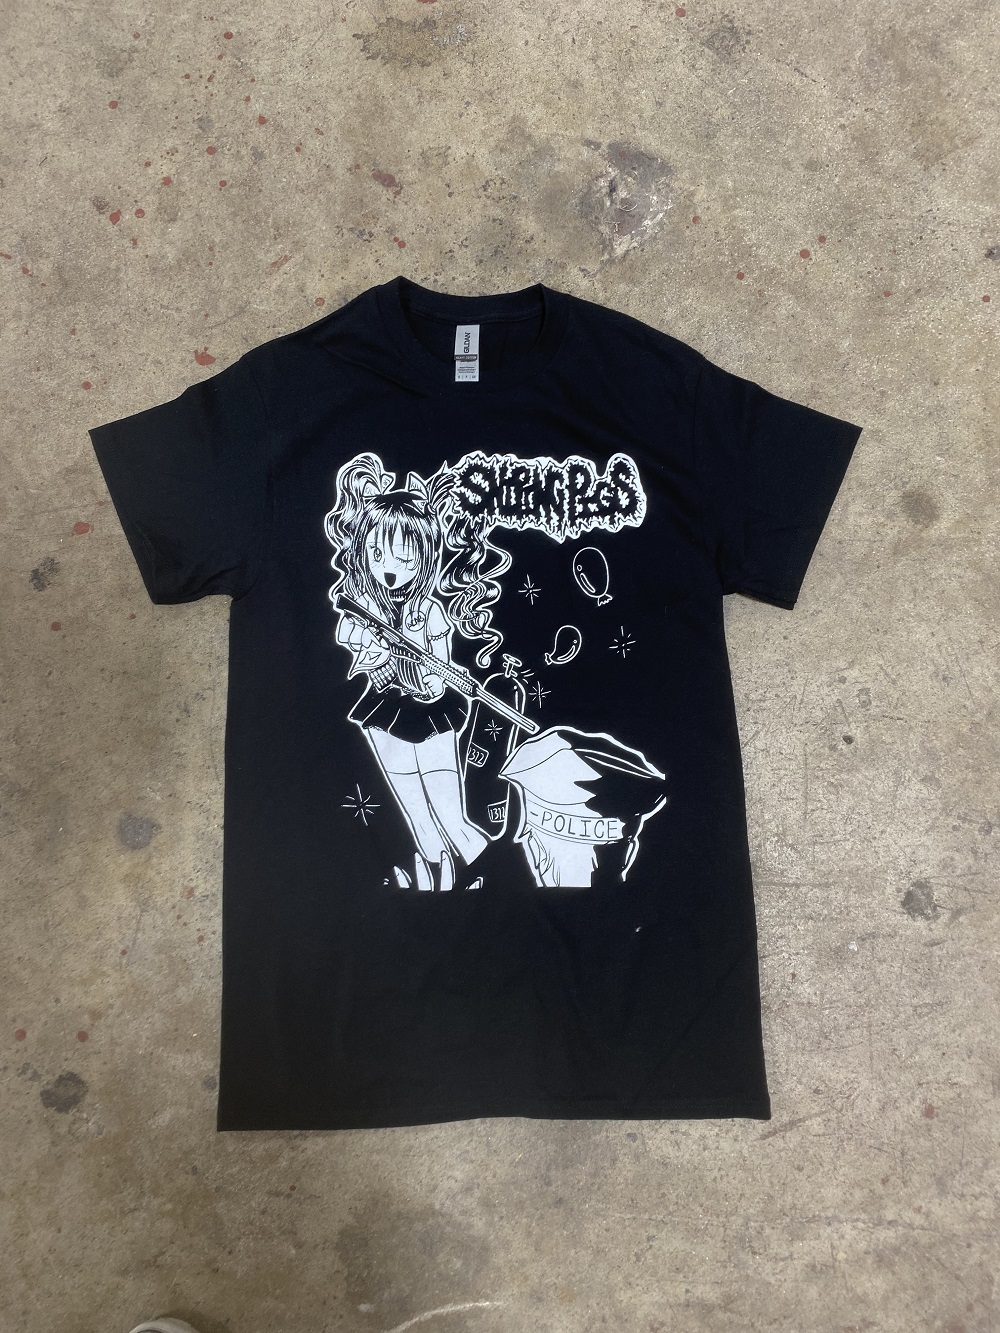 Sniping Pigs - Mincess Shirt (SMALL)